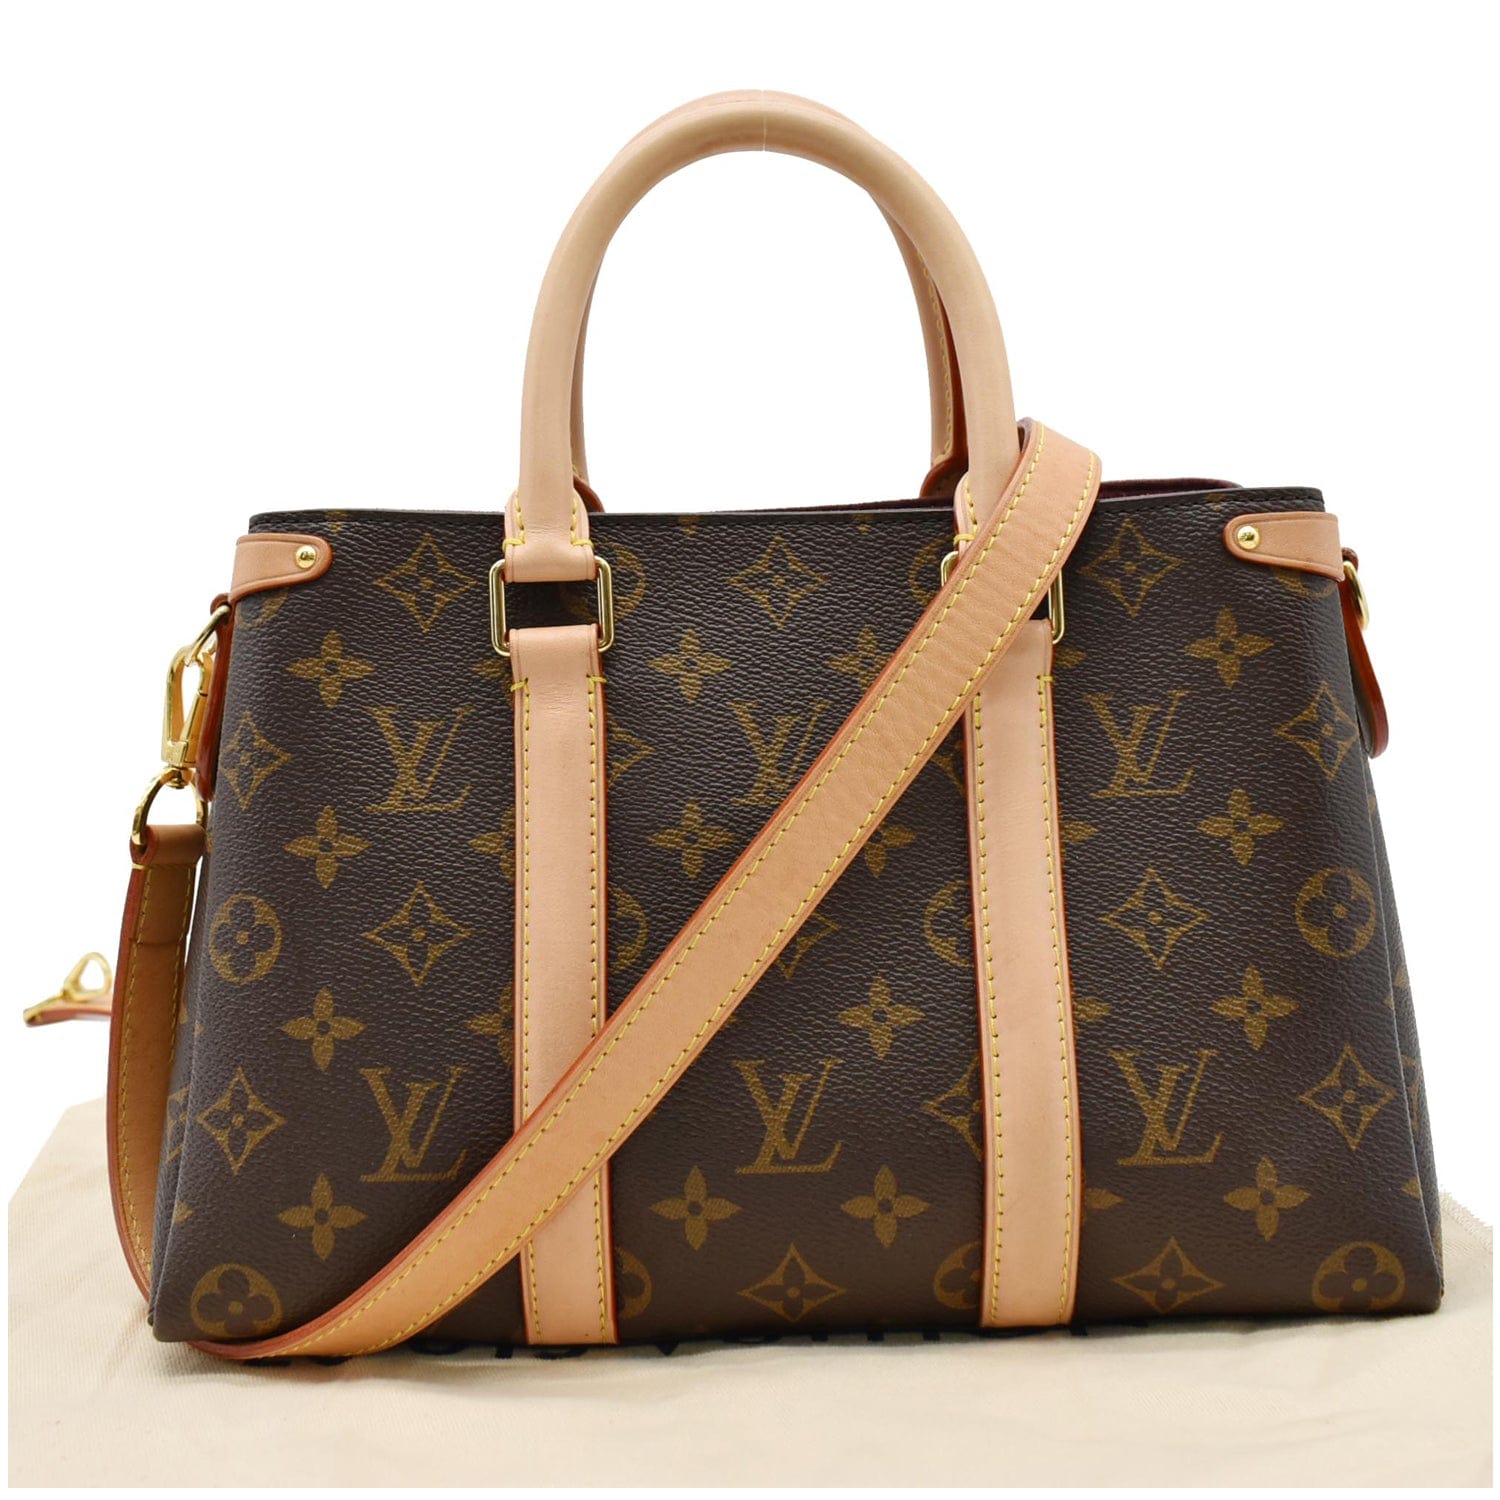 Louis Vuitton Soufflot Baggage Fees